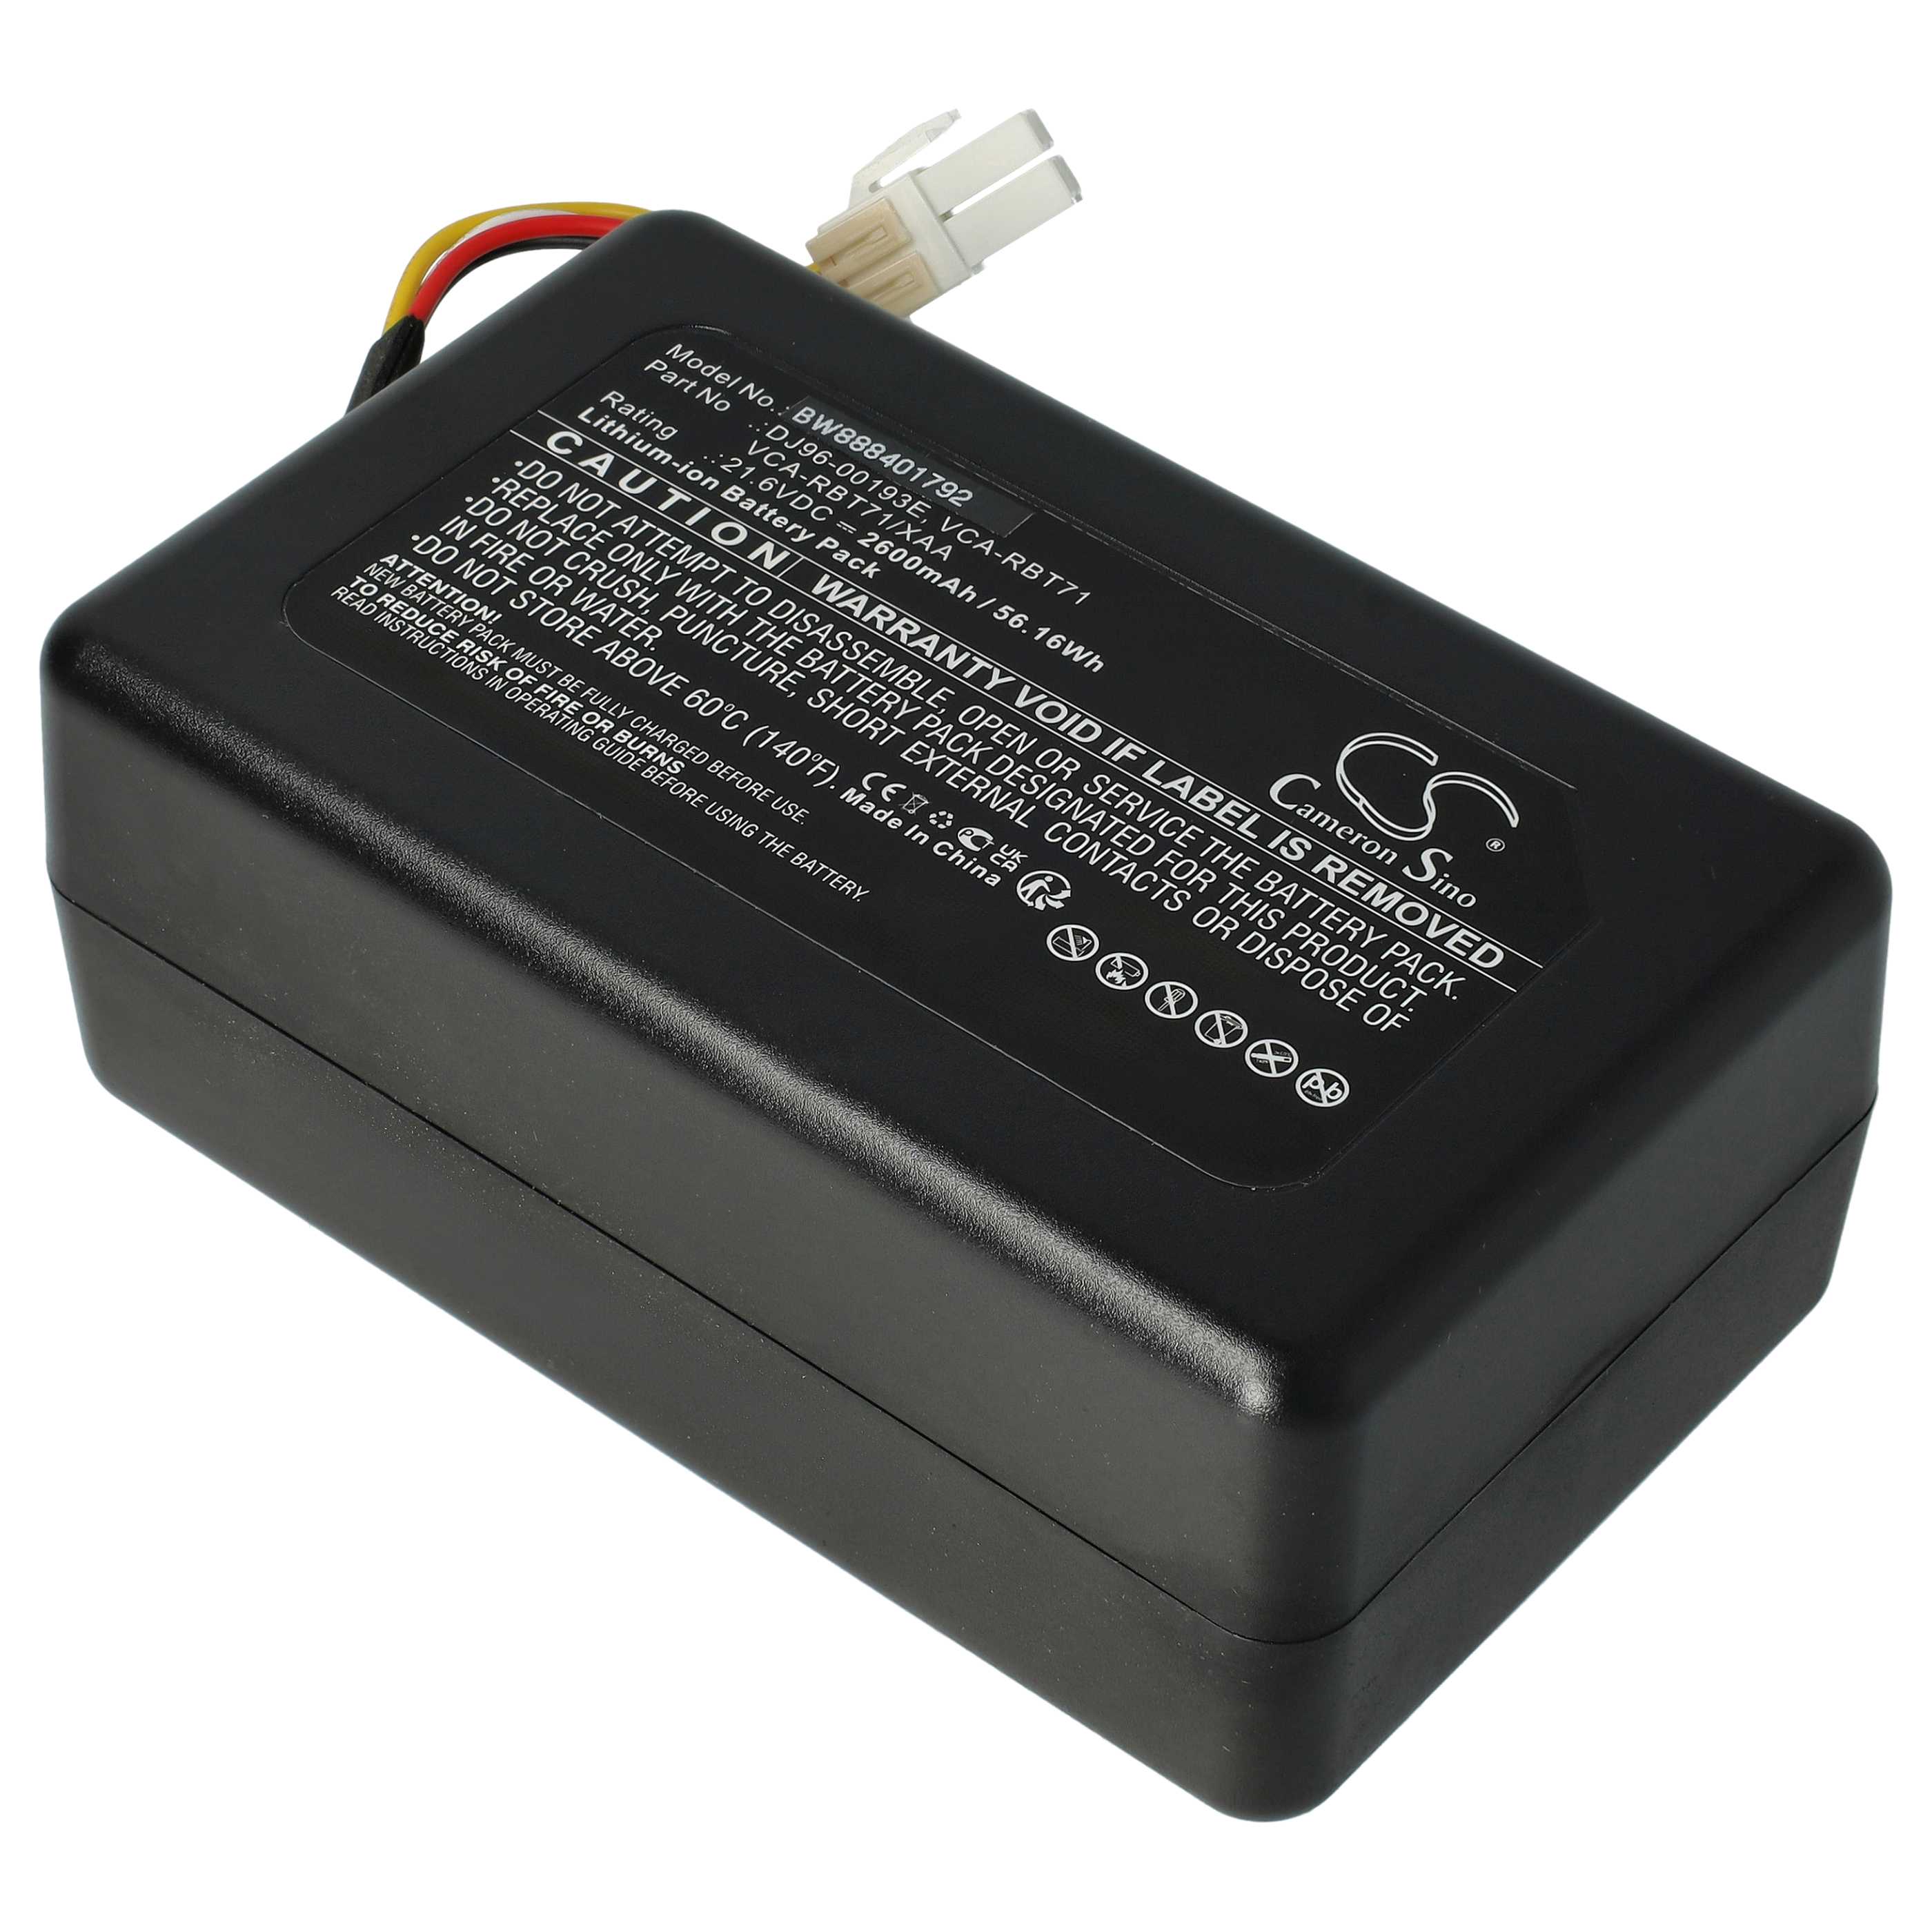 Akumulator do robota zamiennik Samsung DJ96-00202A, DJ96-00193E, DJ96-00193C - 2600 mAh 21,6 V Li-Ion, czarny